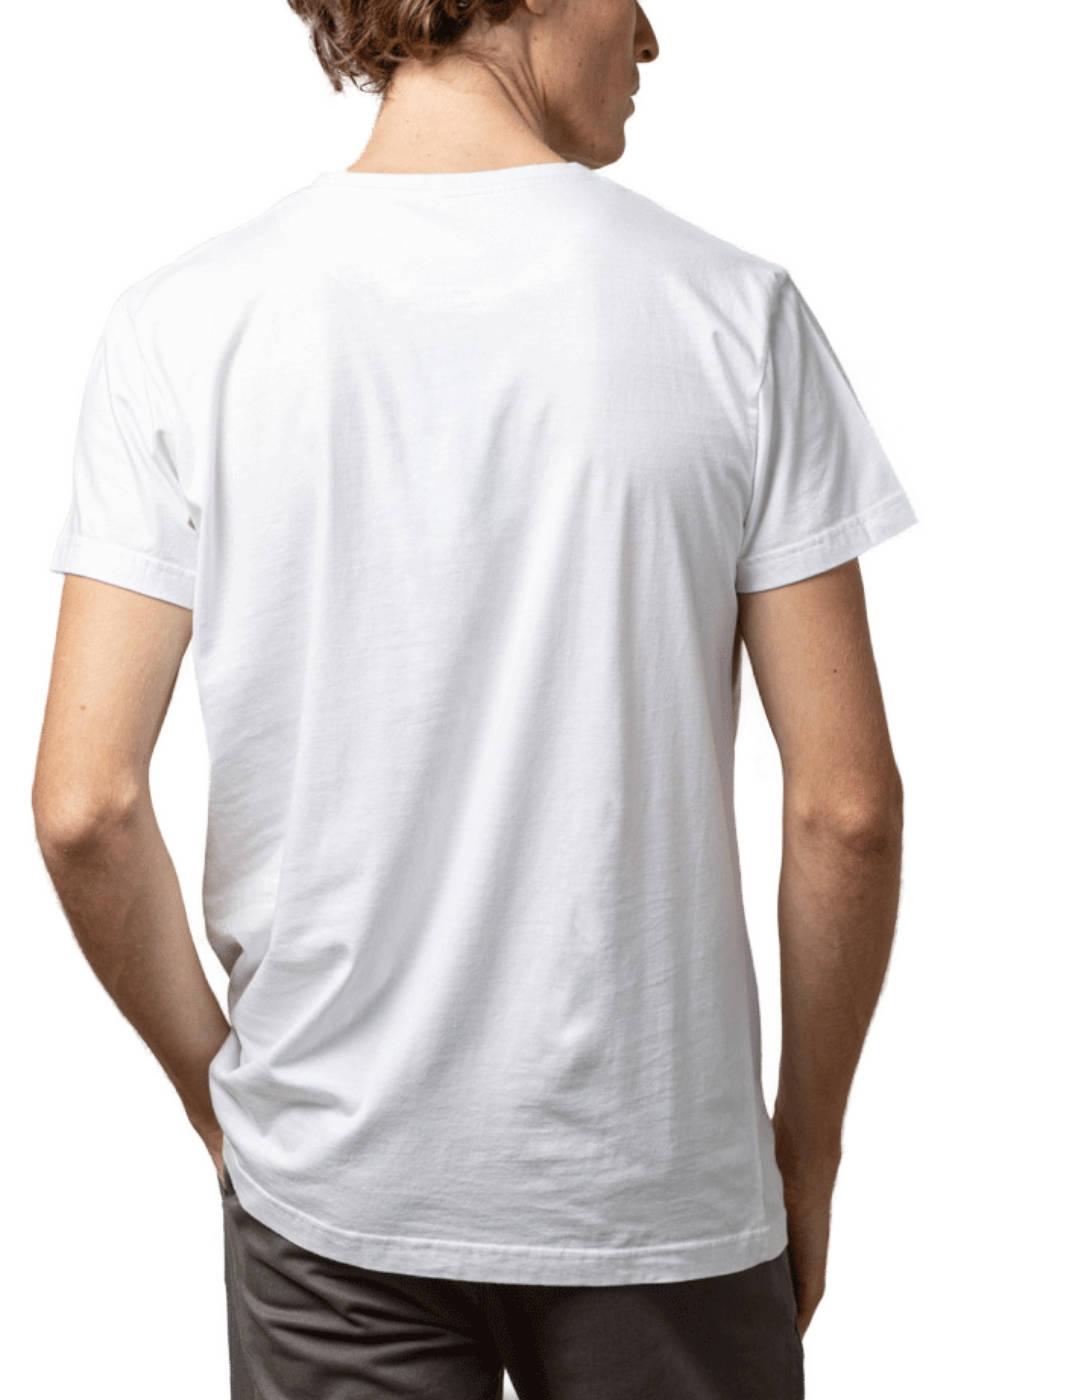 Camiseta Scotta Fish organic blanco manga corta para hombre